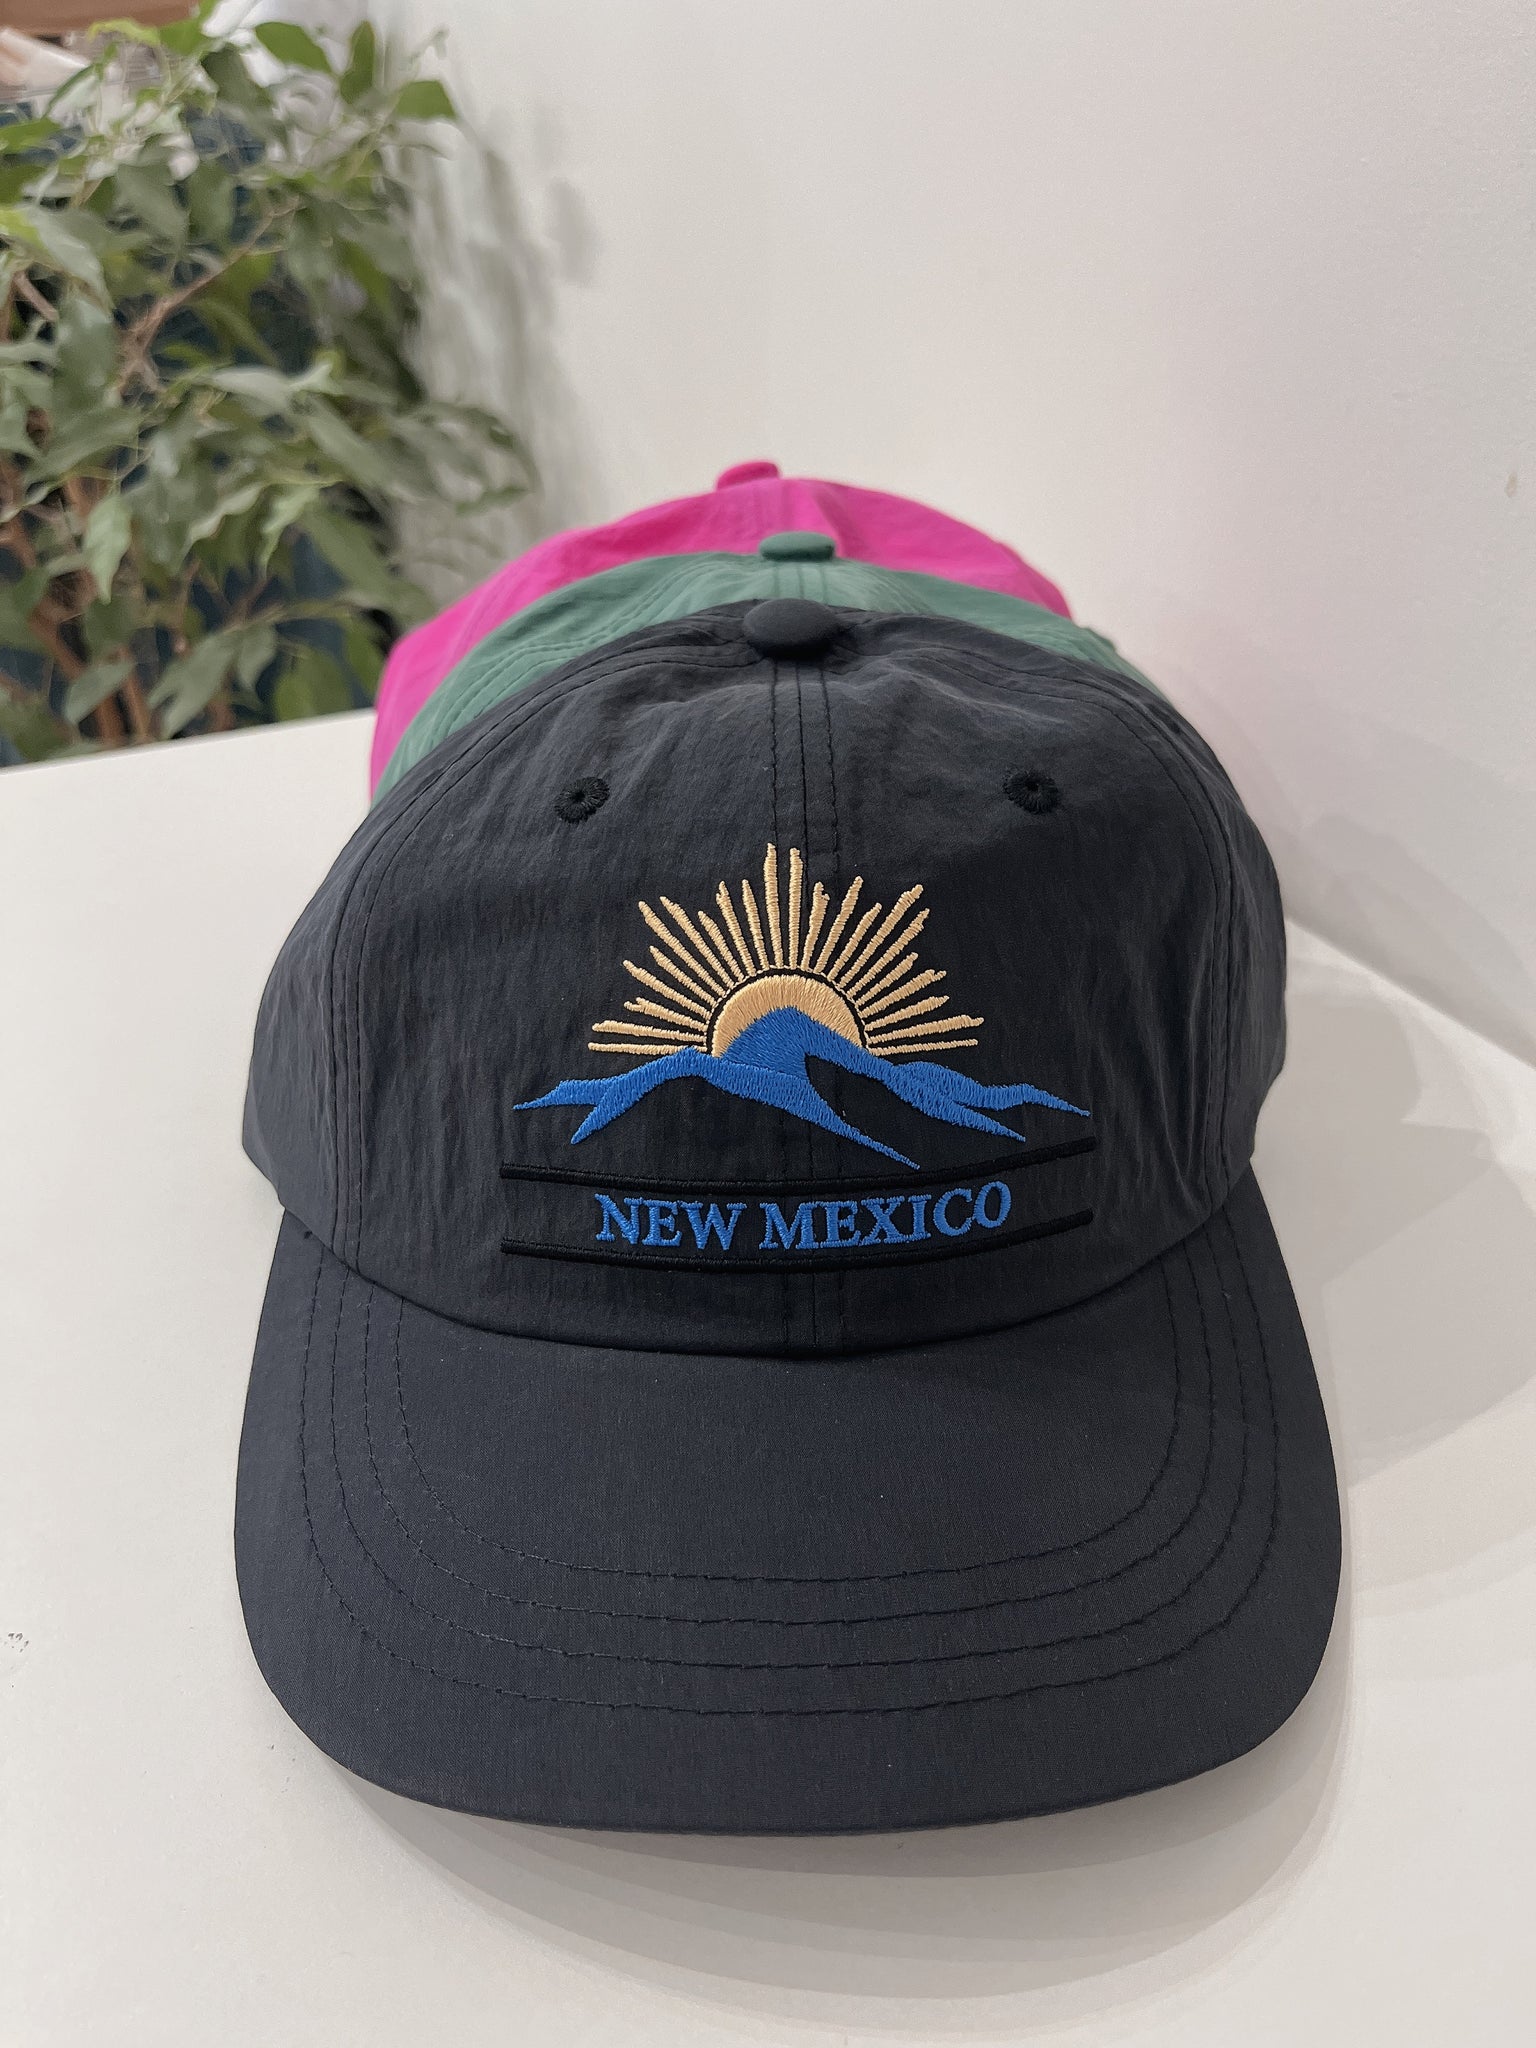 SUO New Mexico cap